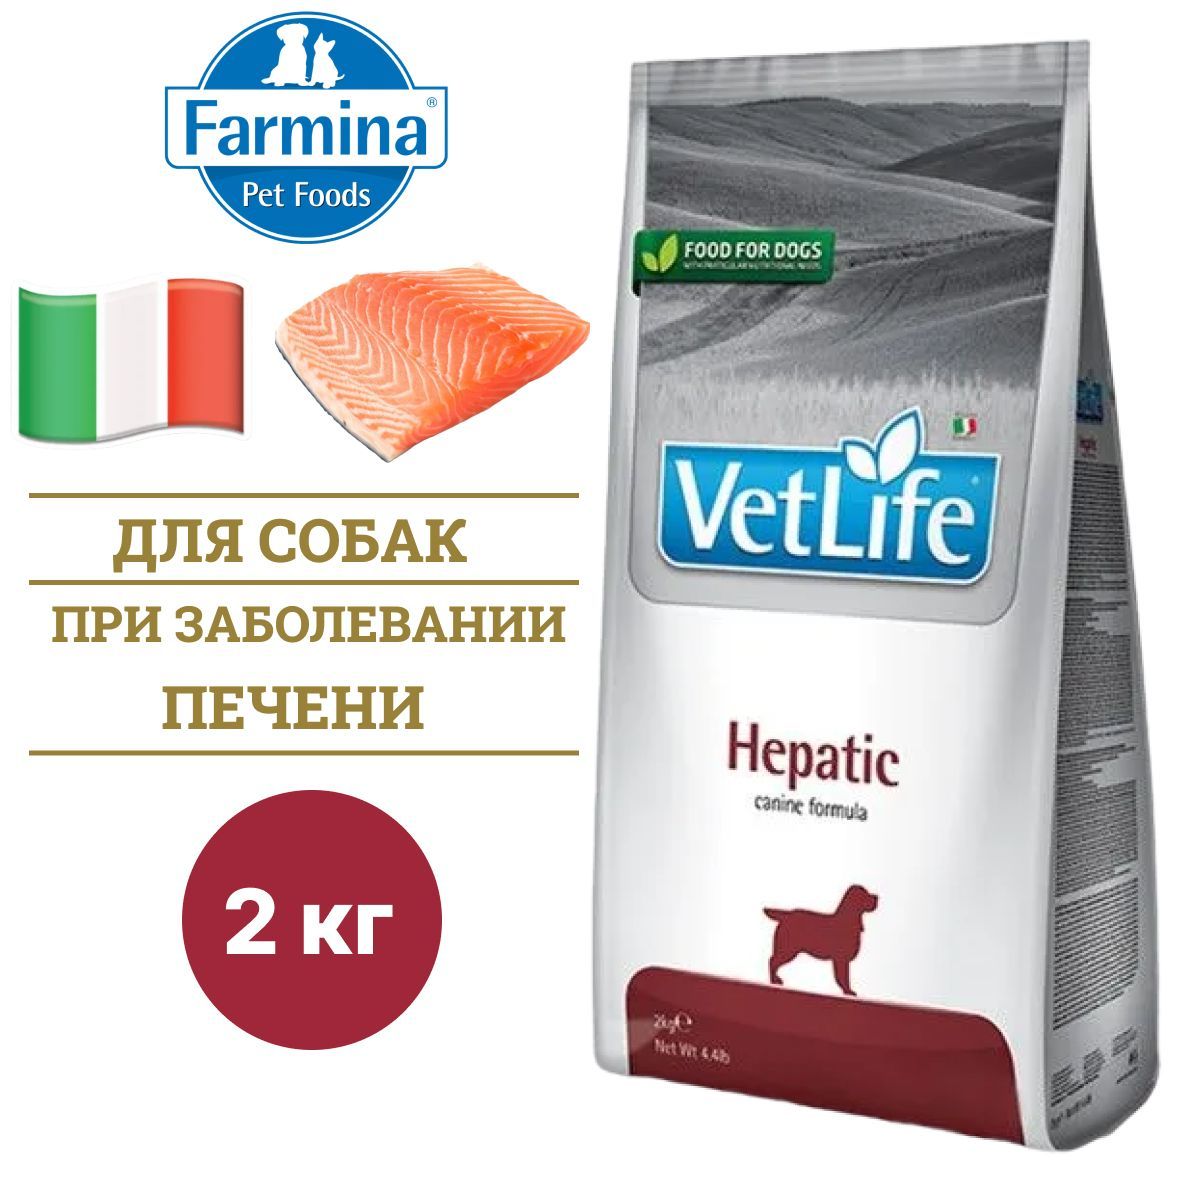 Vet life hepatic. Vet Life hepatic корм для собак.